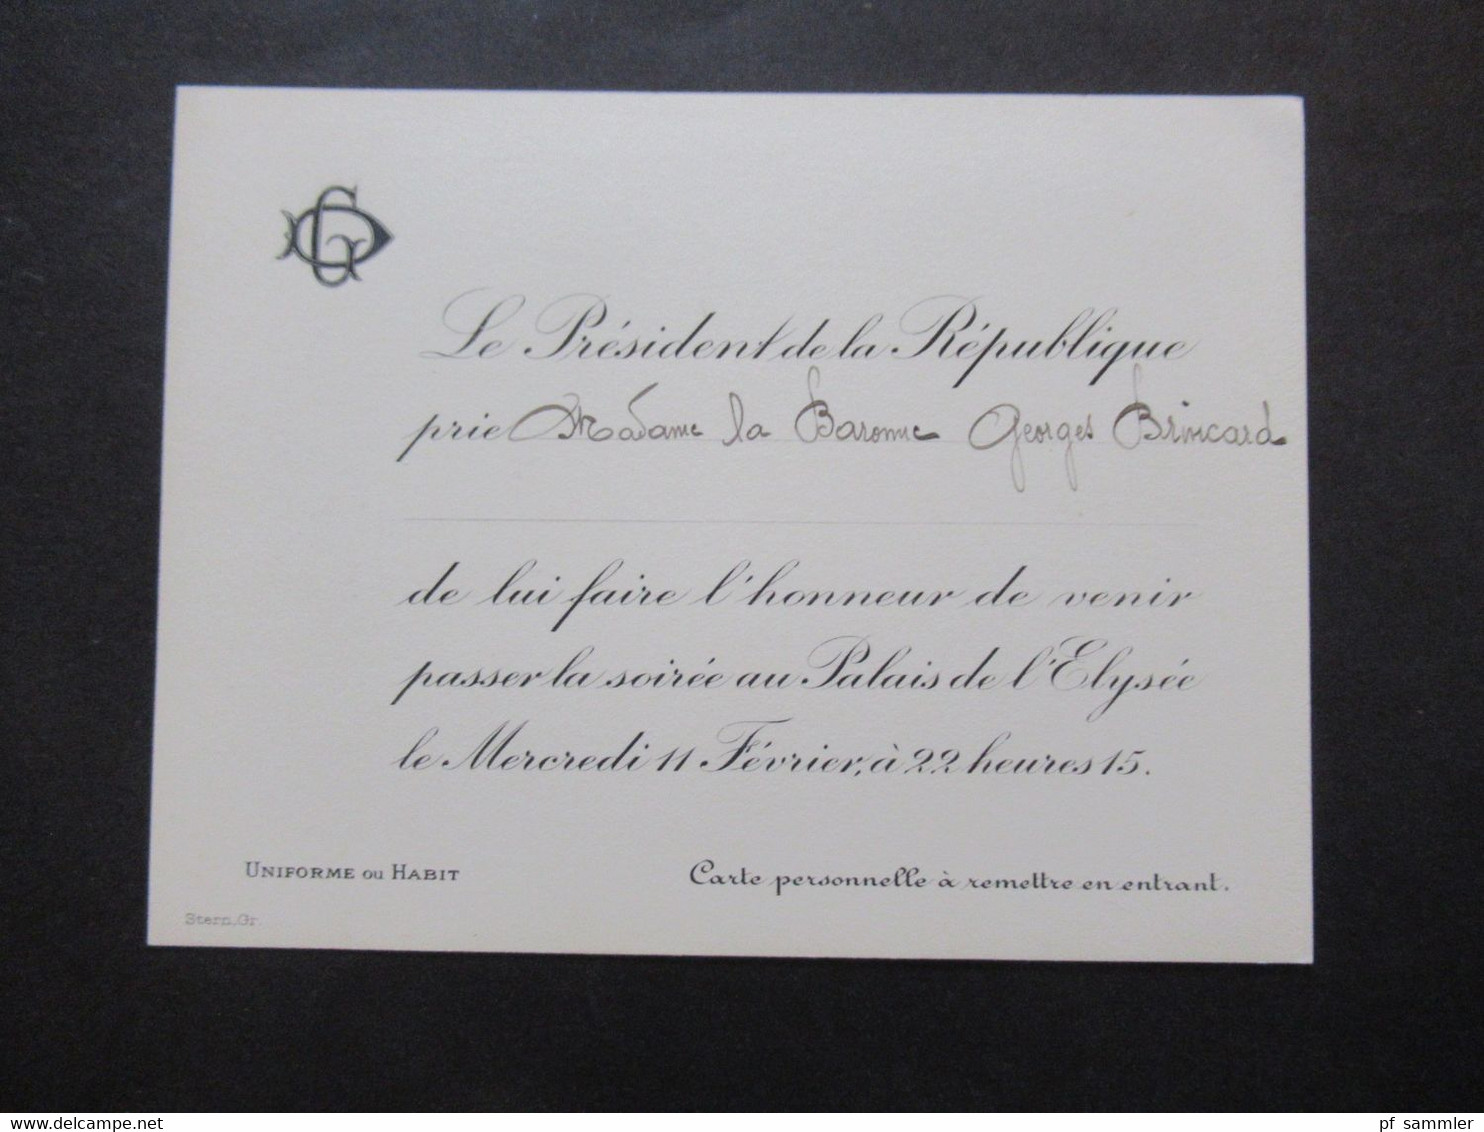 Frankreich 1920er Jahre 2x Originale Einladungskarte Von Gaston Doumergue Le President De La Republique Zur Soirée - Tickets - Vouchers